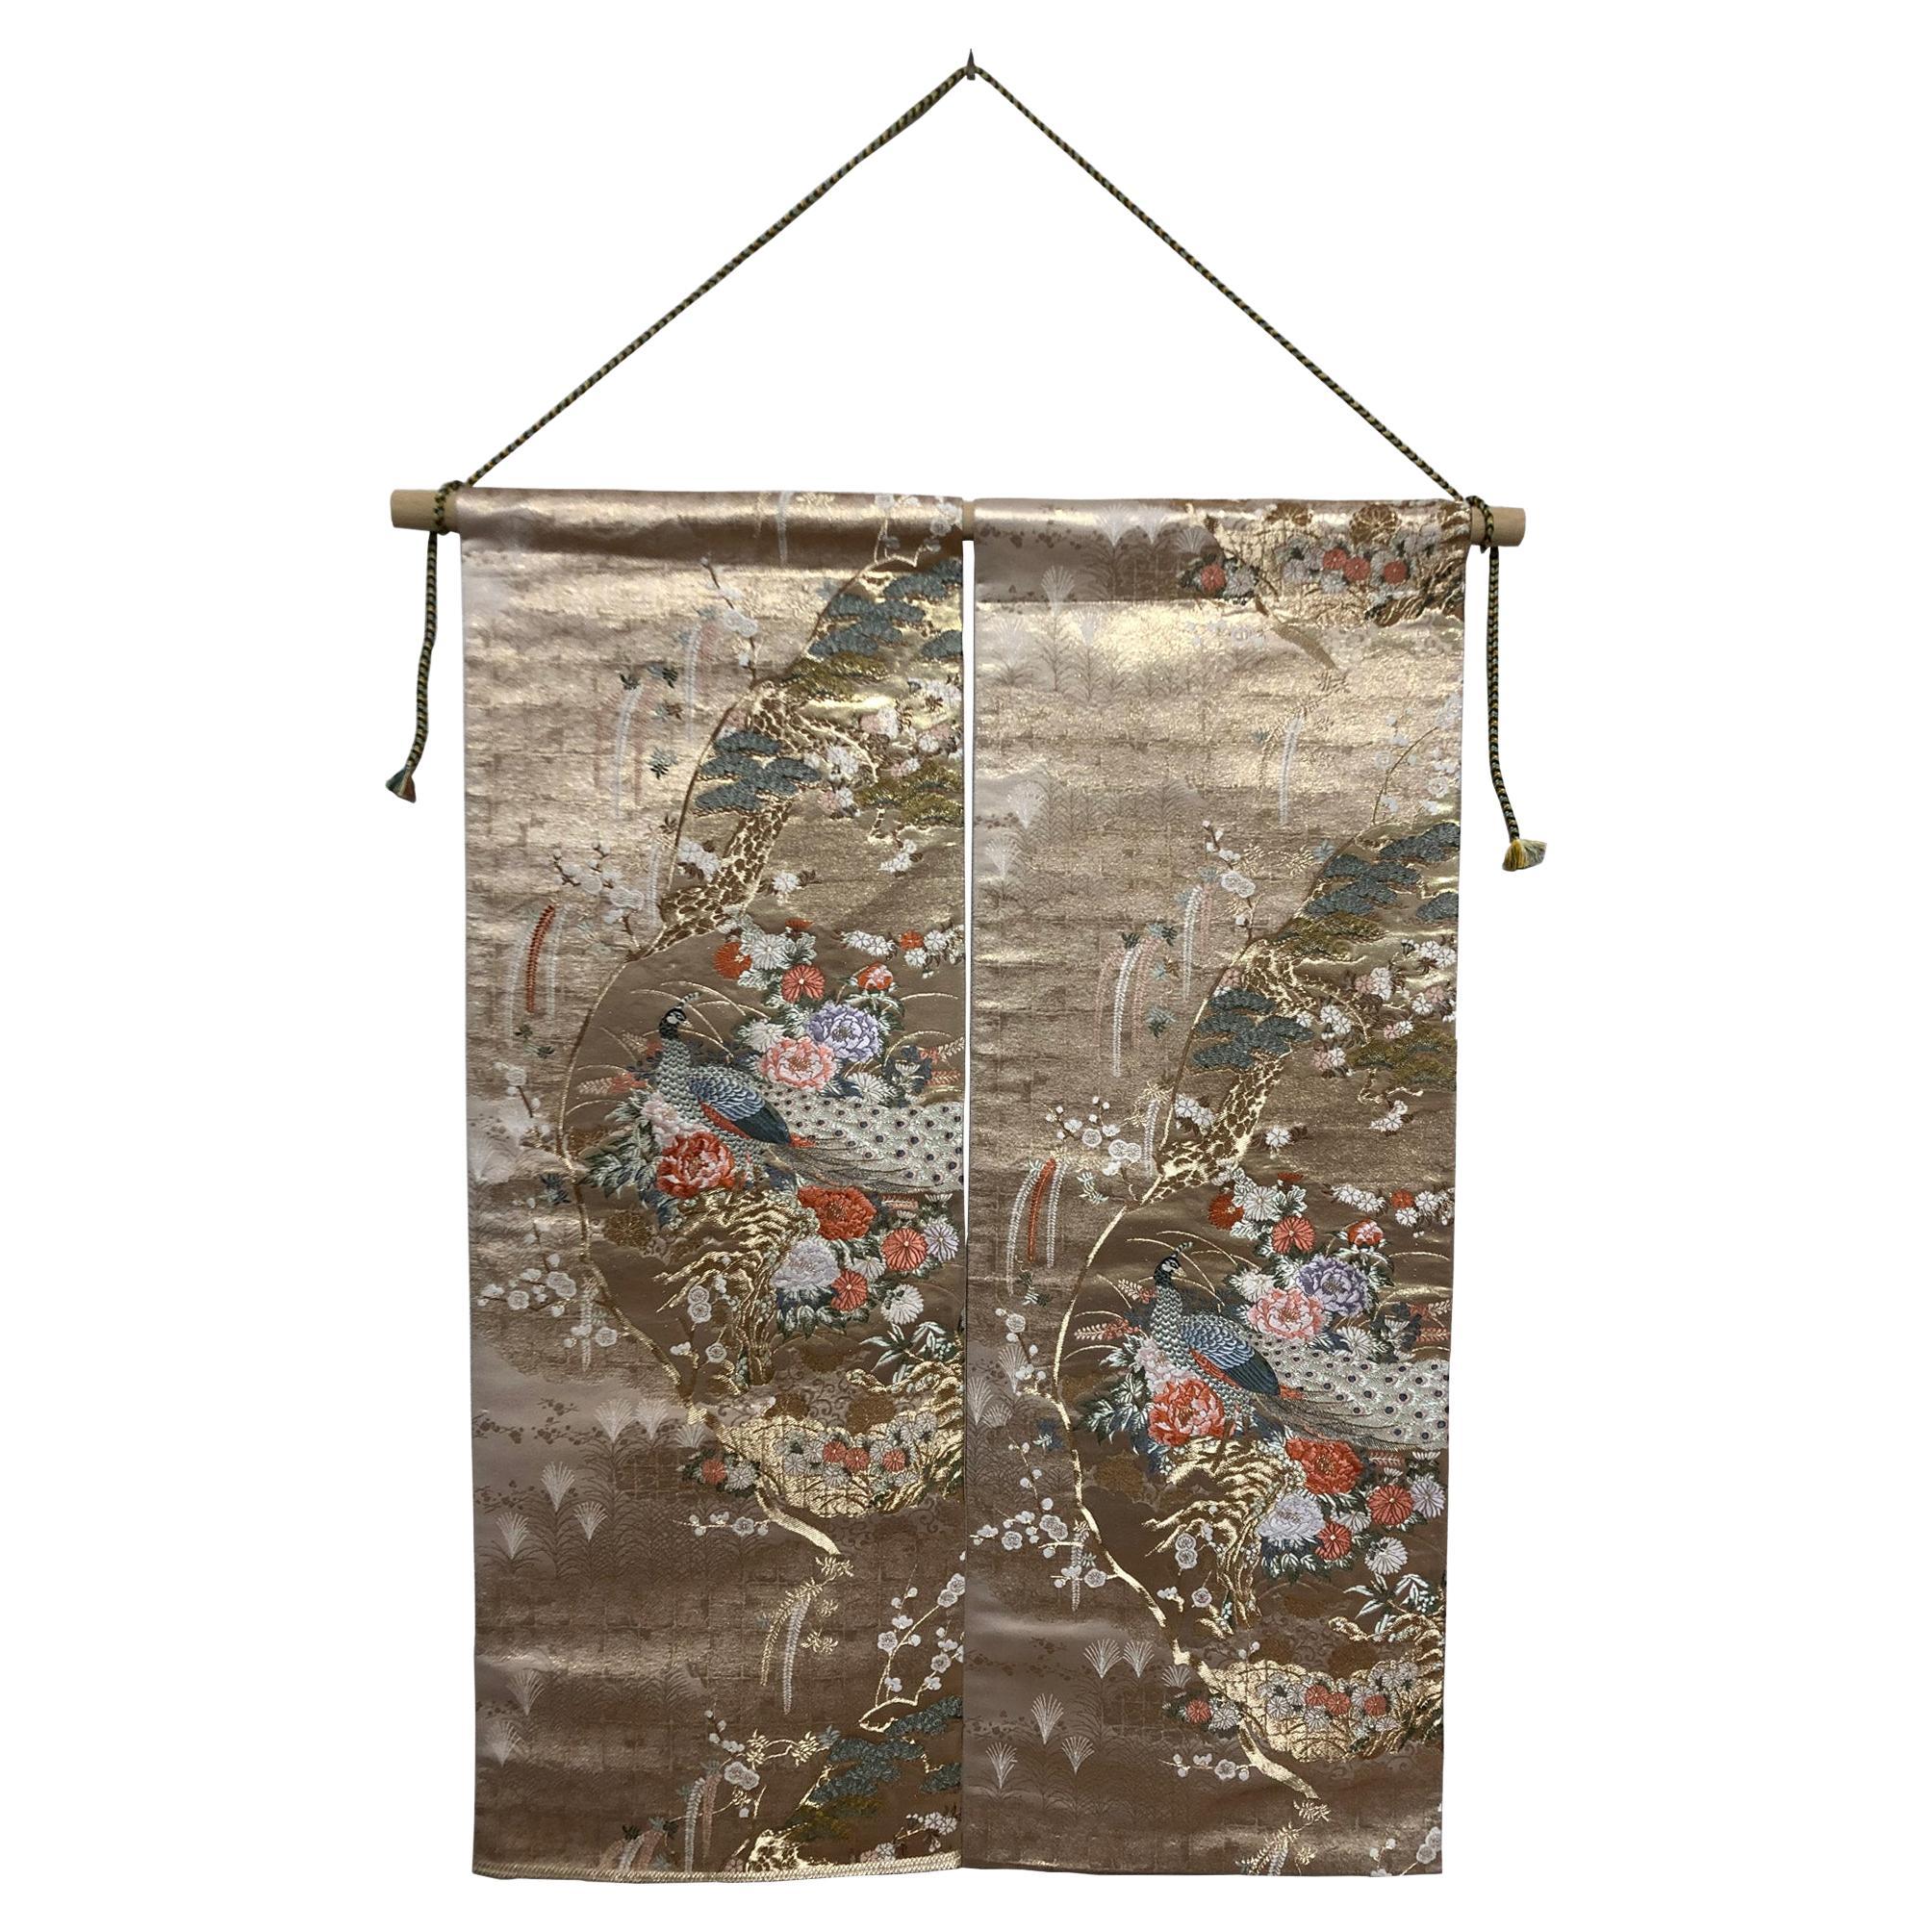 Japanese Kimono Art / Tapestry, the Queen of Peacocks